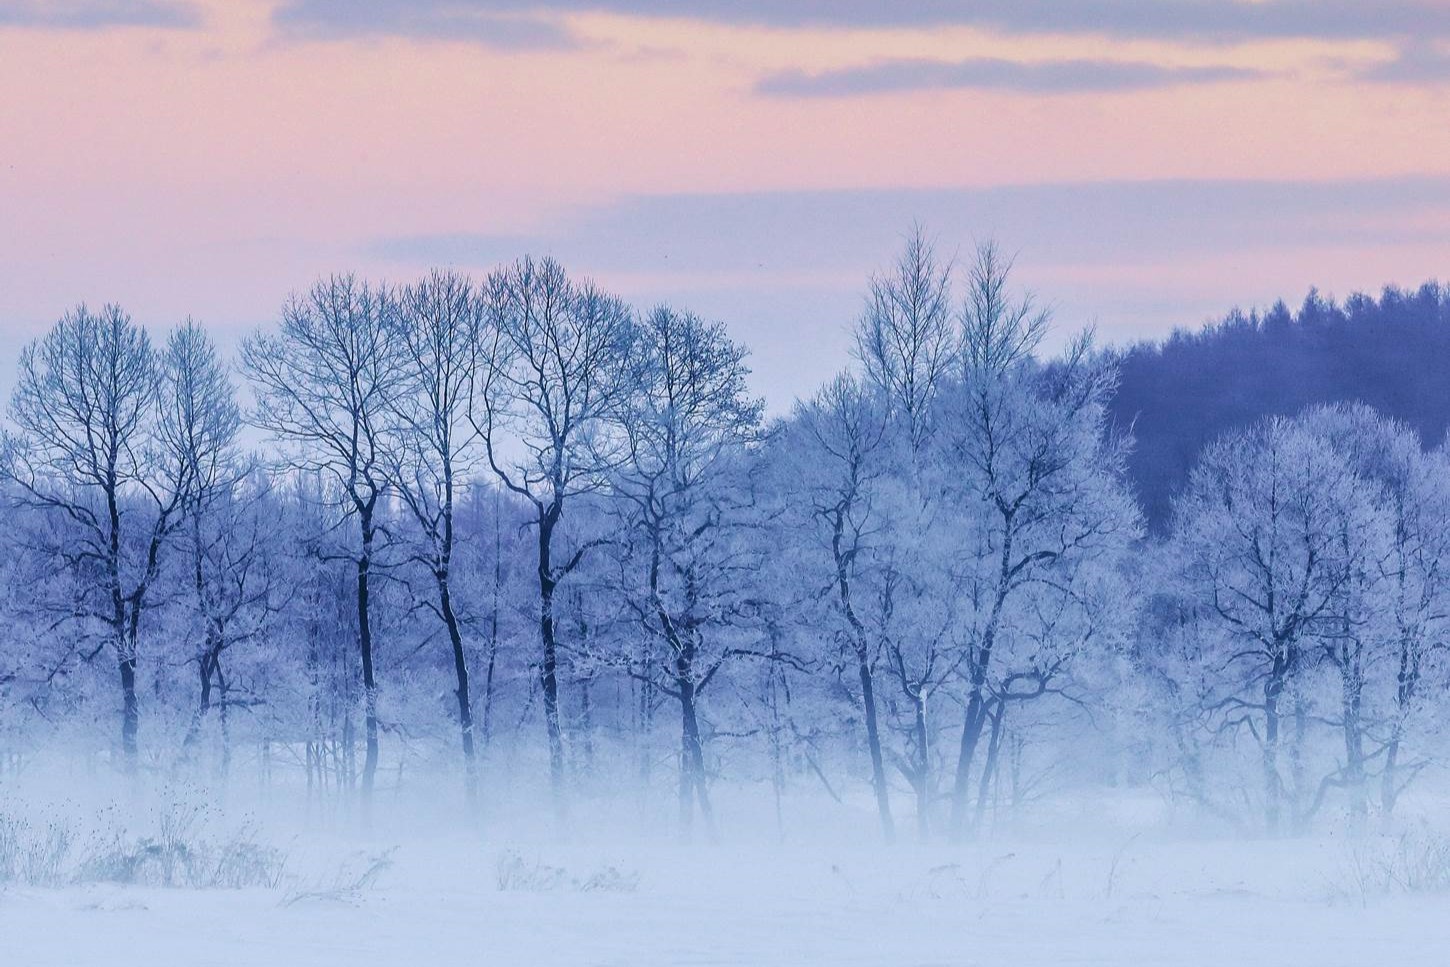 Video: Hokkaido Winter - A Beautiful Snowy World